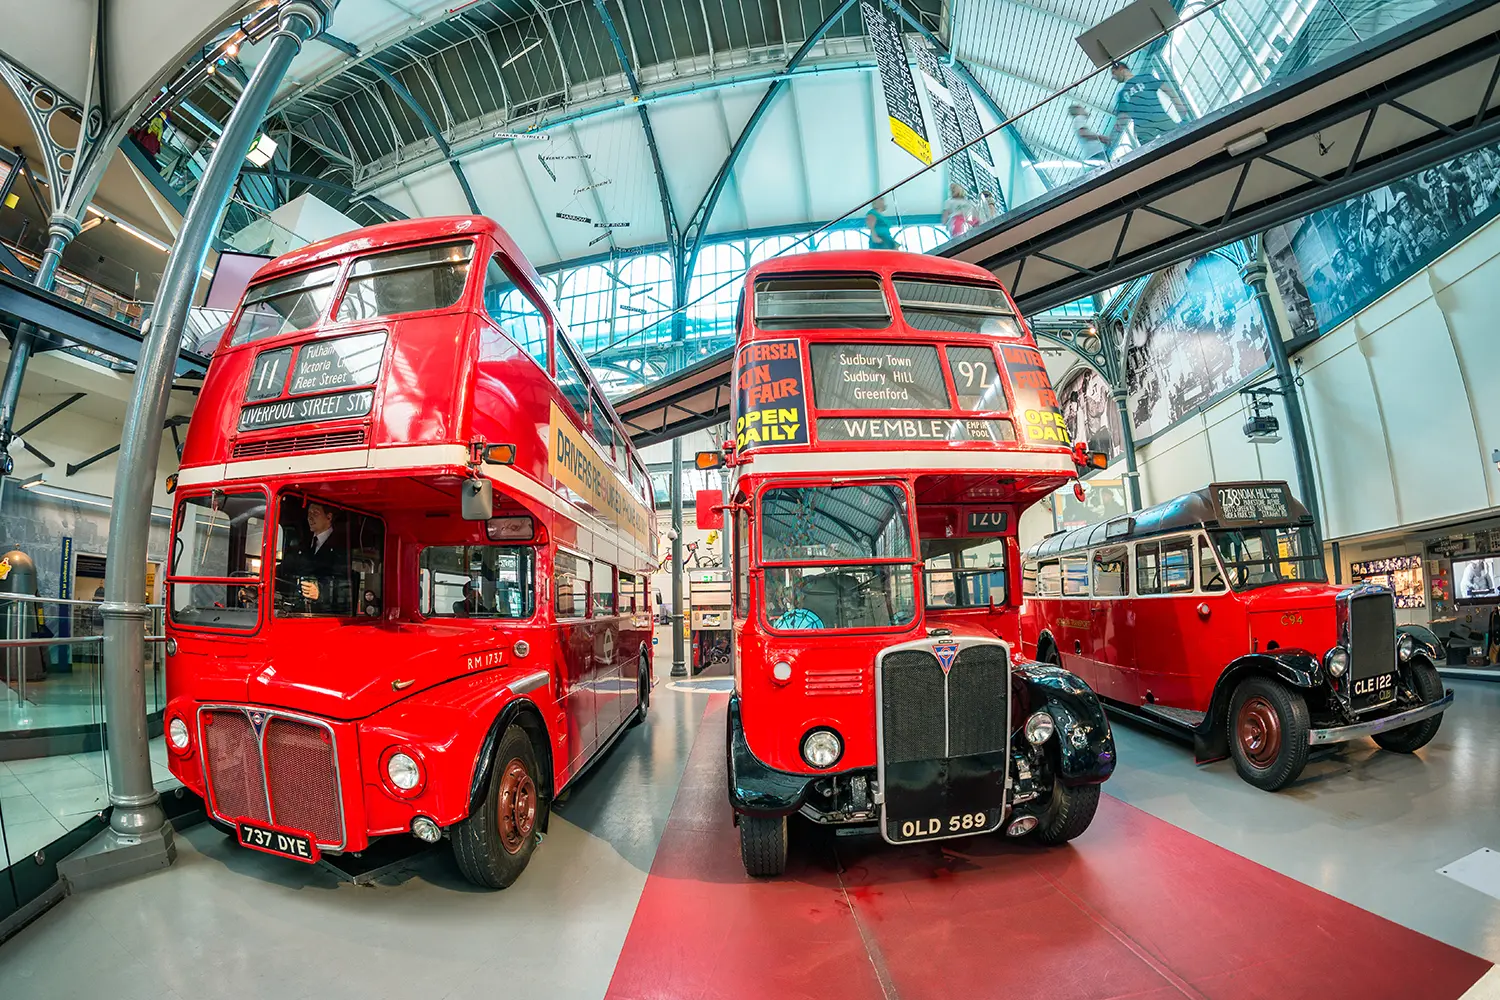 London Transport Museum in London, UK